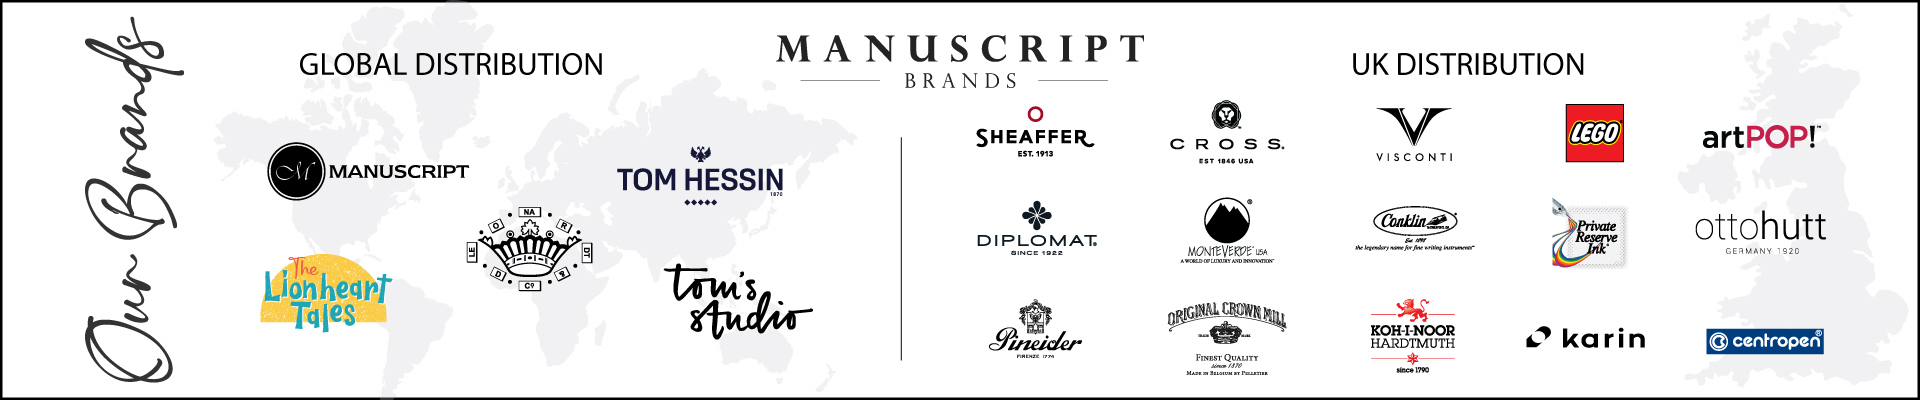 Manuscript Brand Map